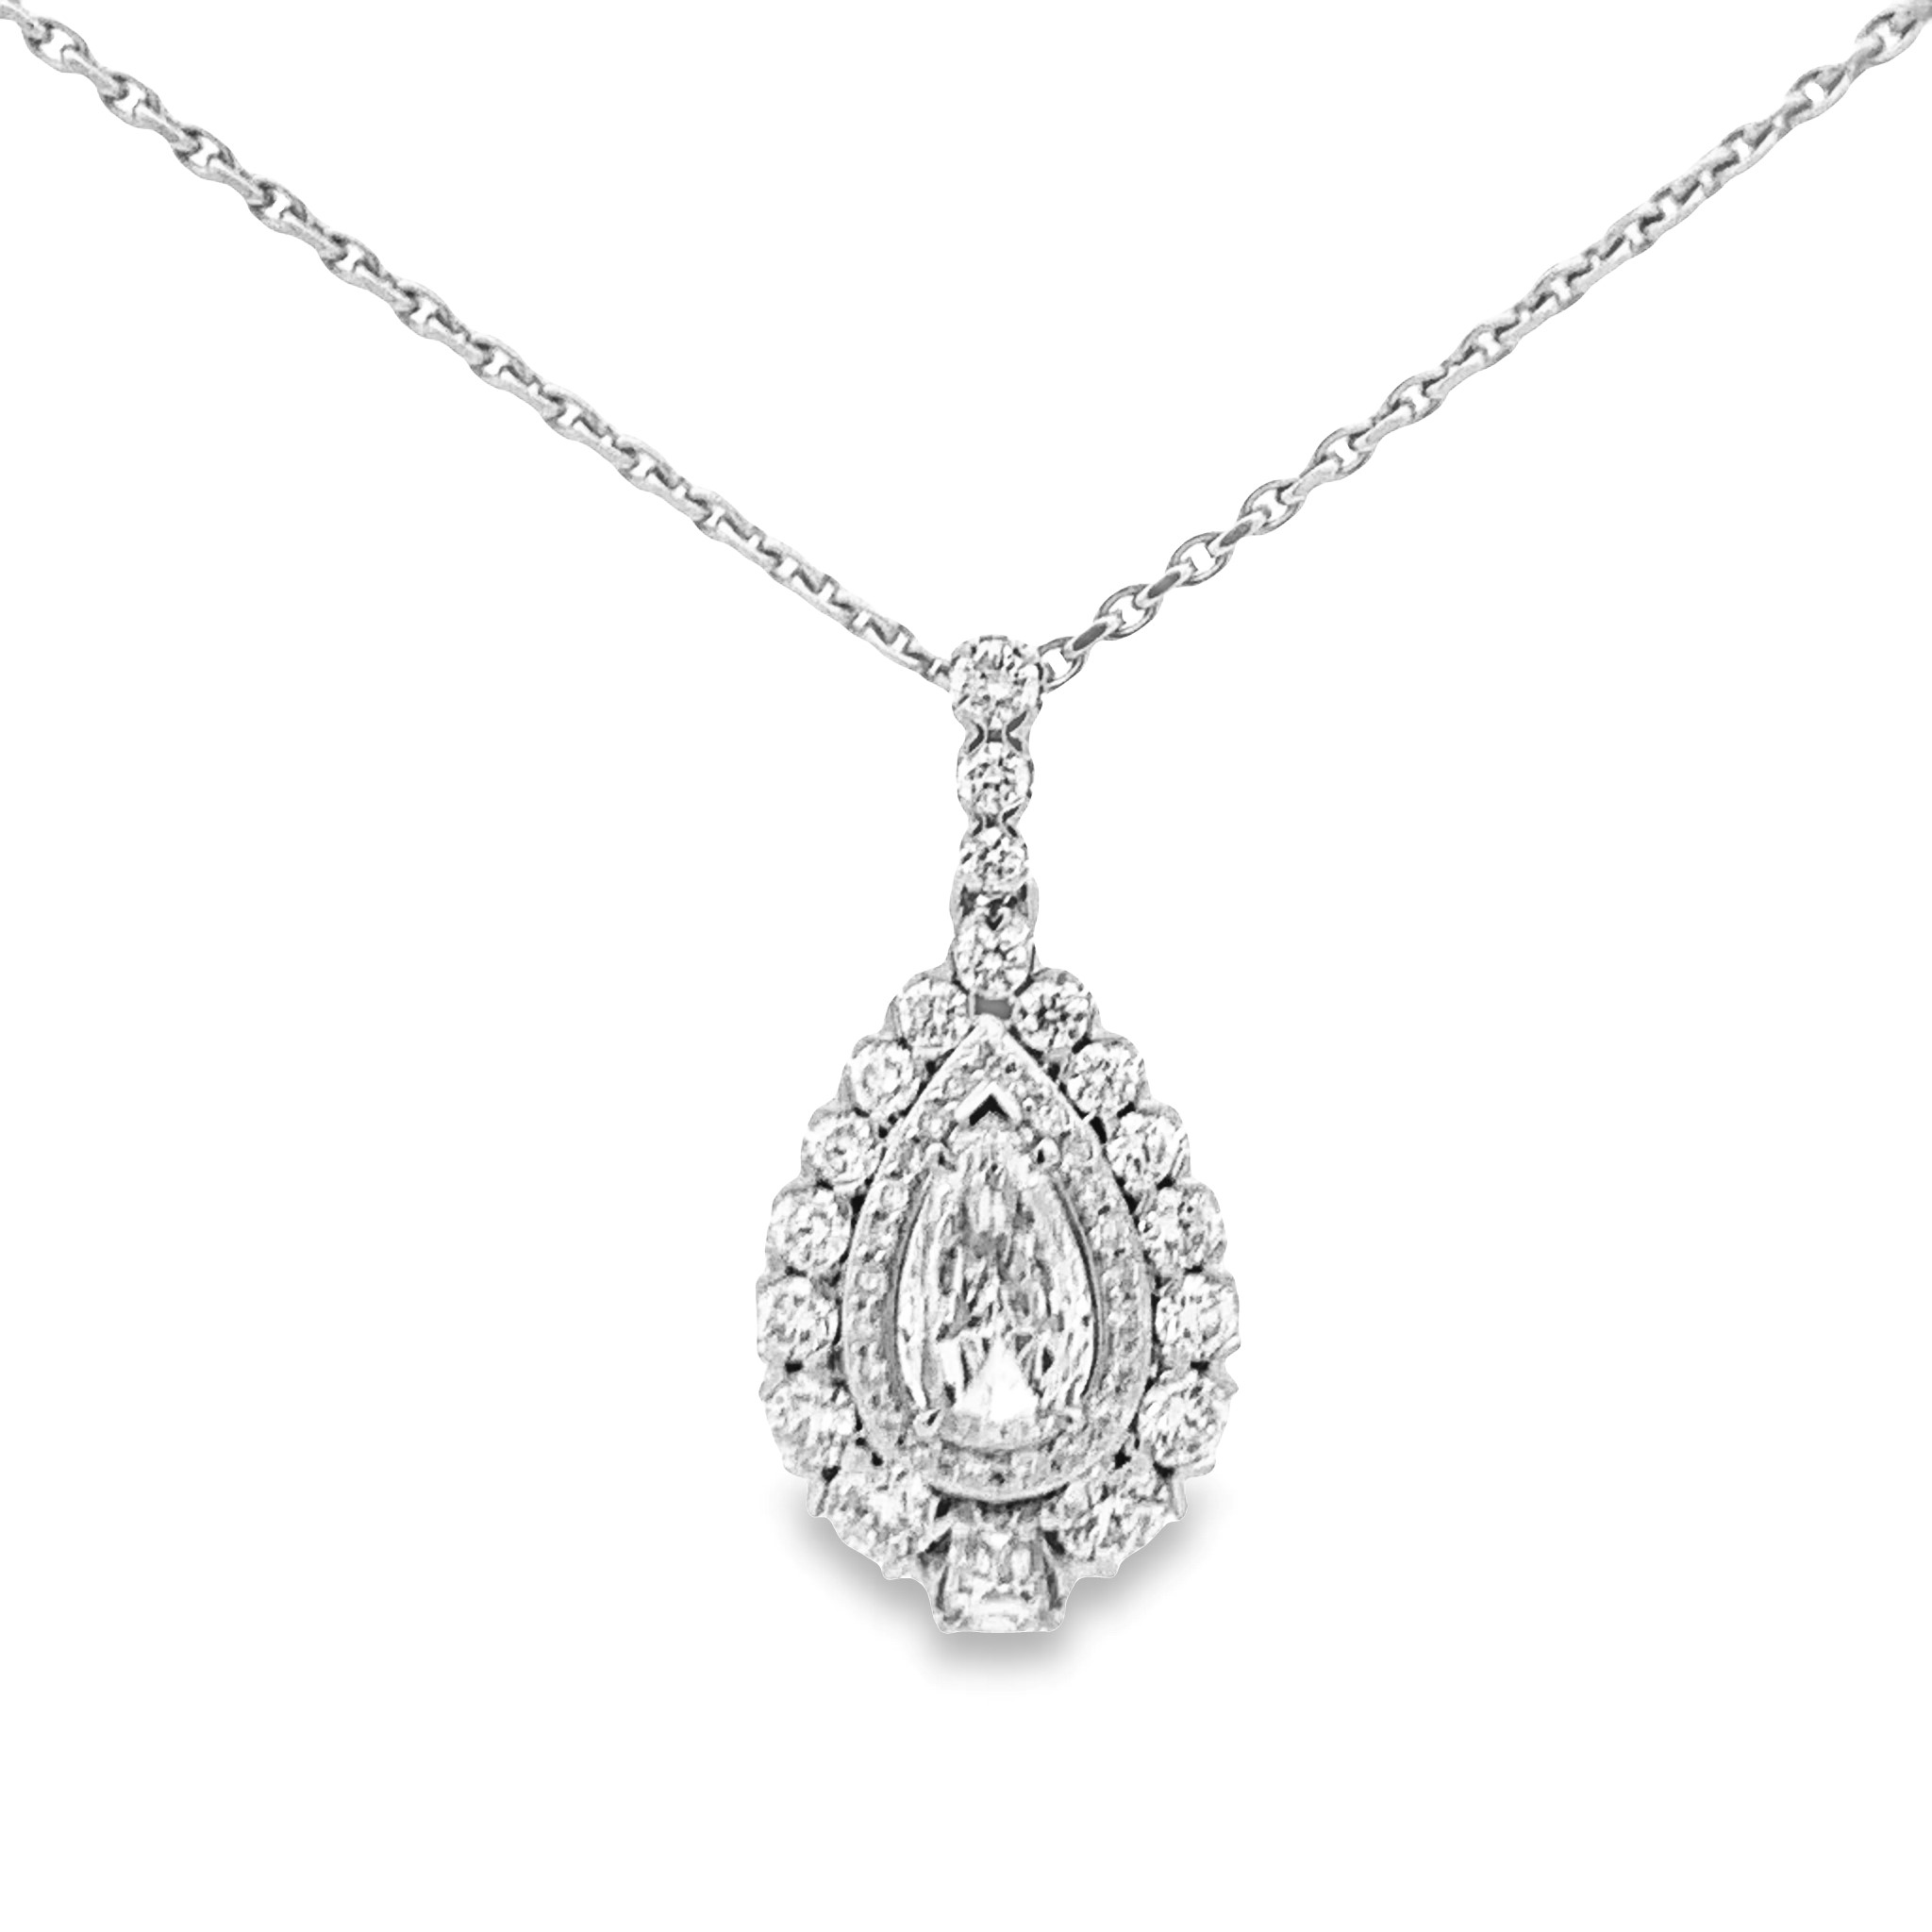 Christopher Designs 18K White Gold Diamond Pear Halo Pendant Necklace